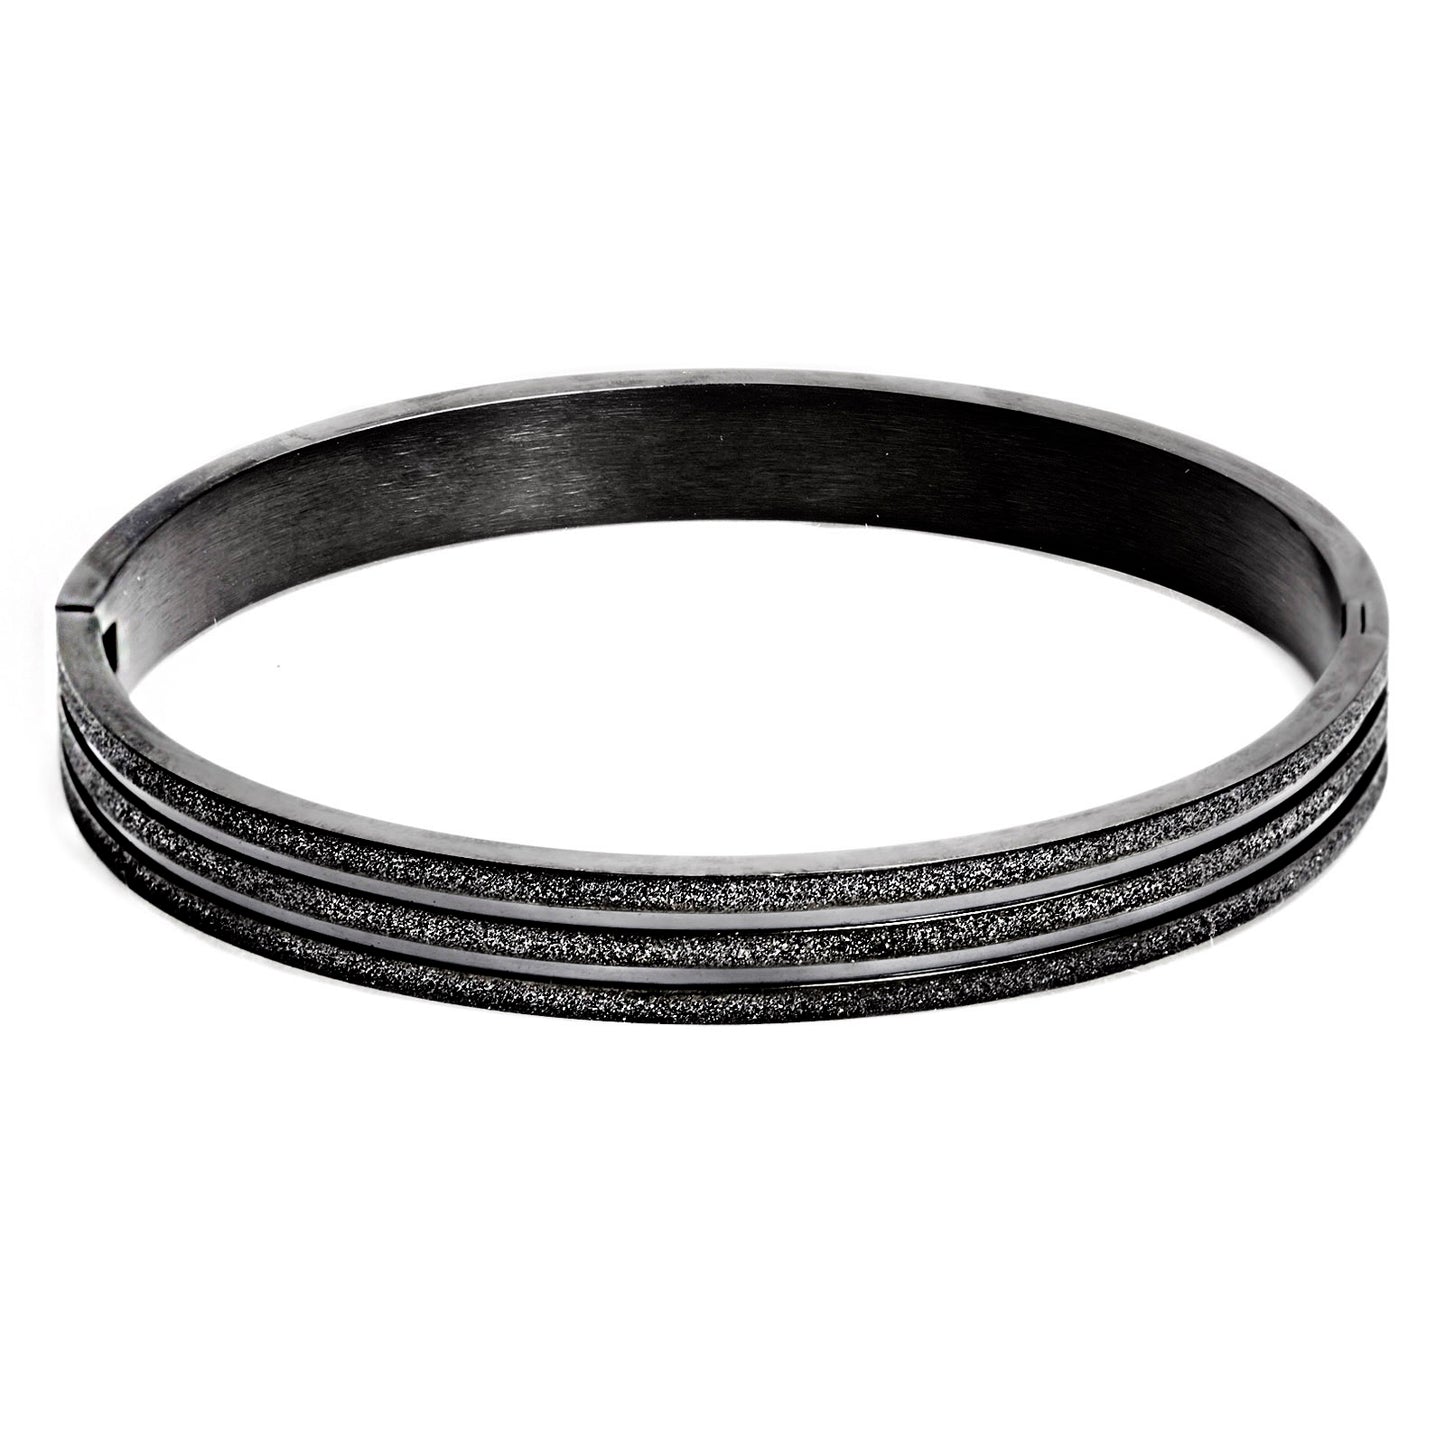 Sandblasted Bangle Black Plated Stainless Steel Bracelet (8 mm) - 8"